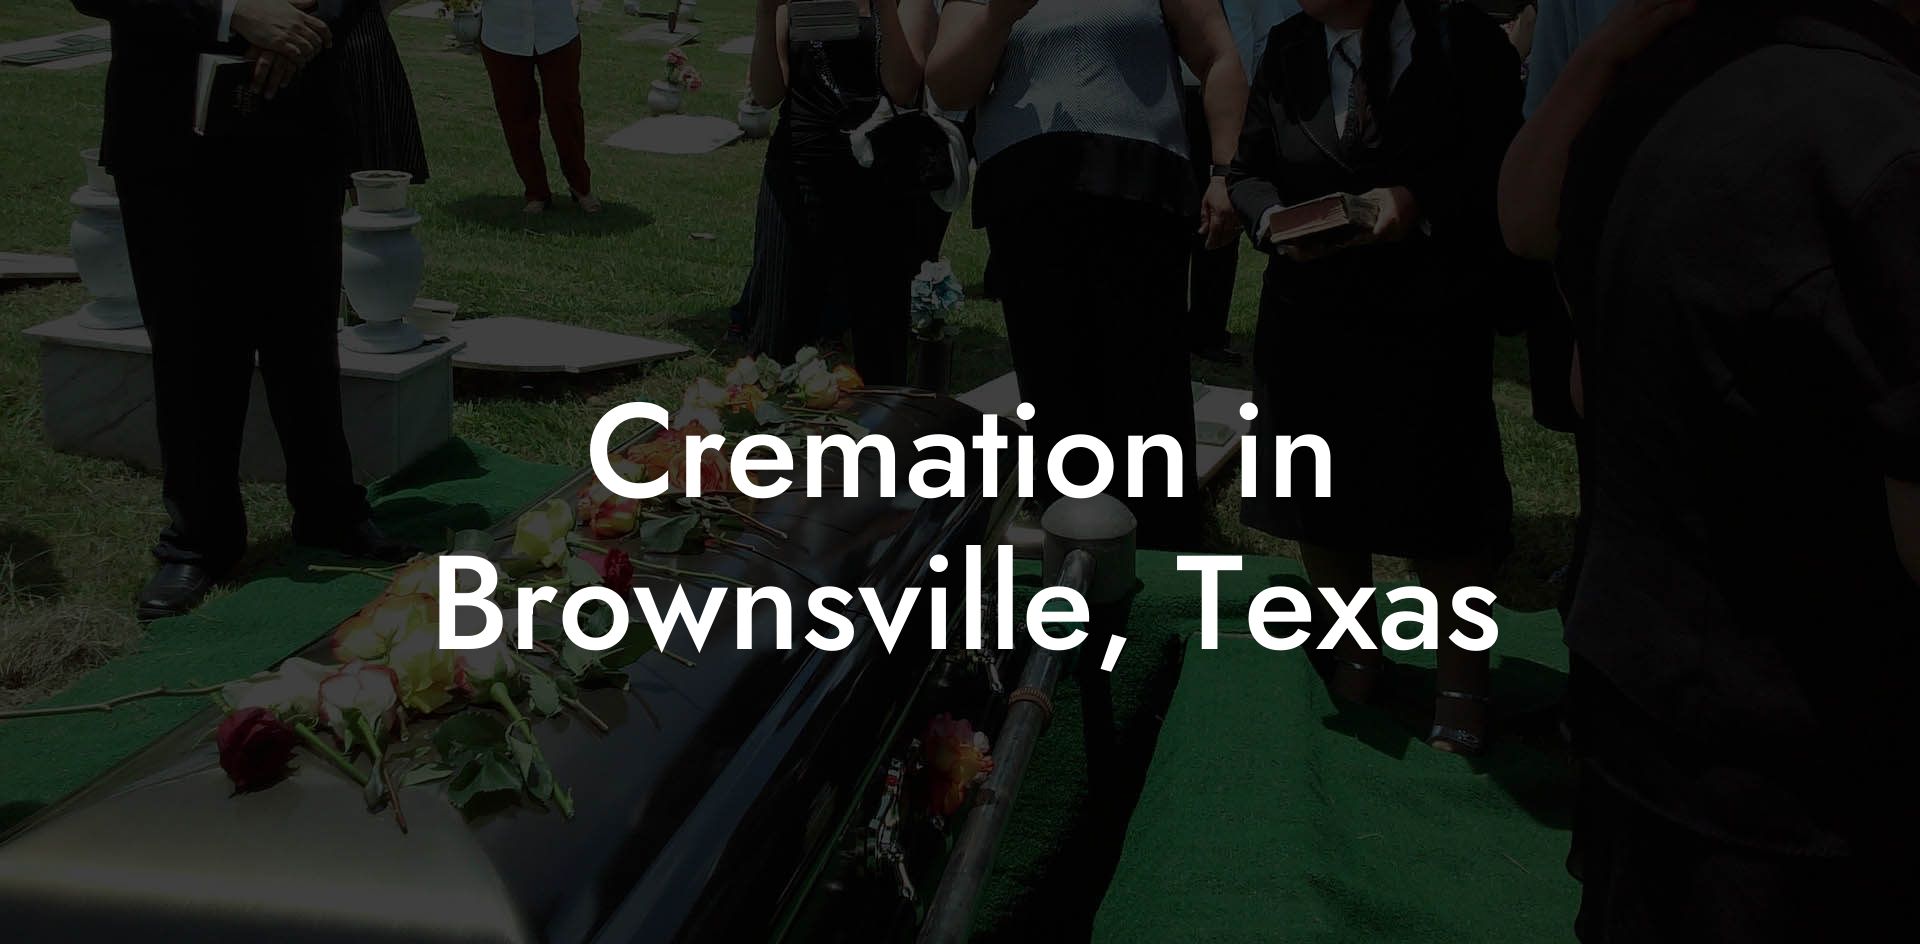 Cremation in Brownsville, Texas